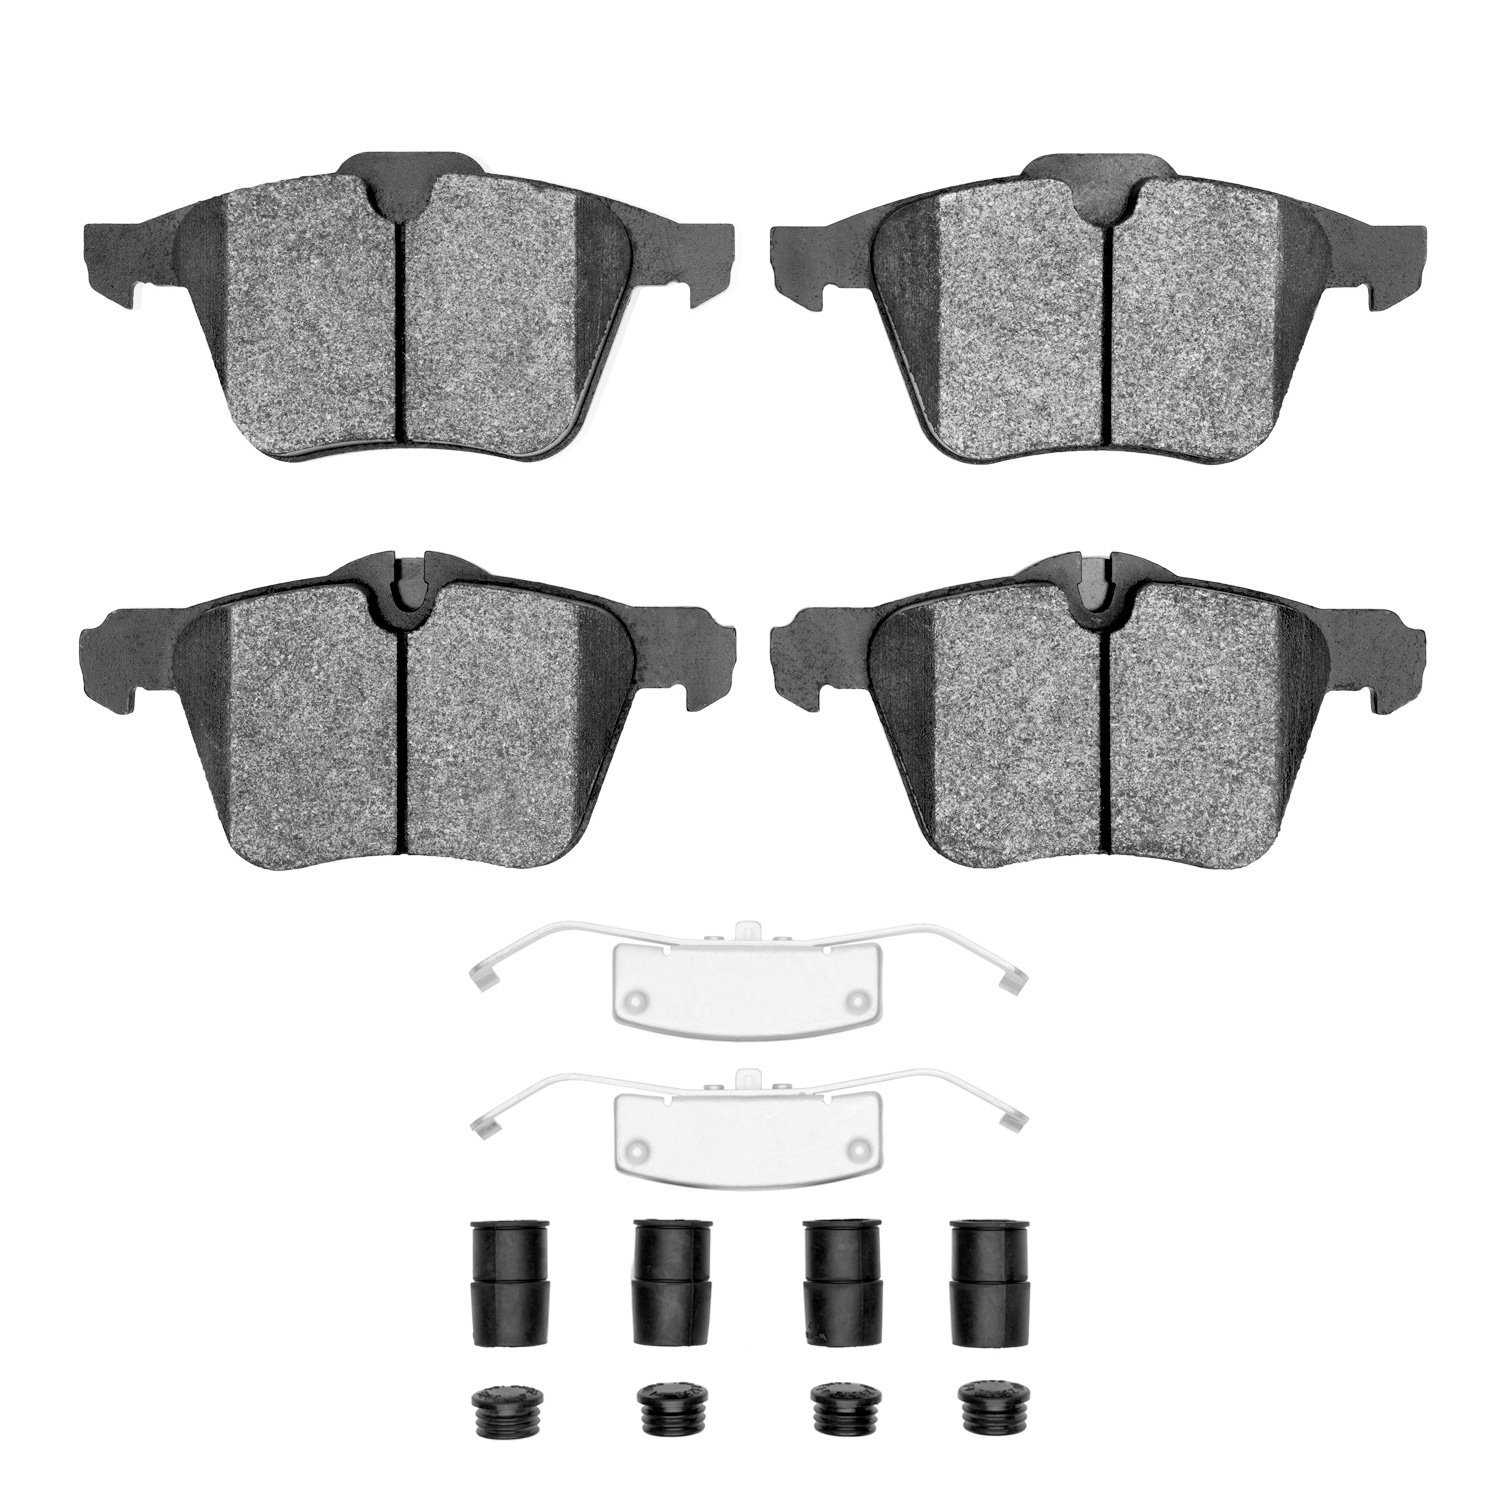 1310-1240-02 3000-Series Ceramic Brake Pads & Hardware Kit, 2010-2019 Jaguar, Position: Front